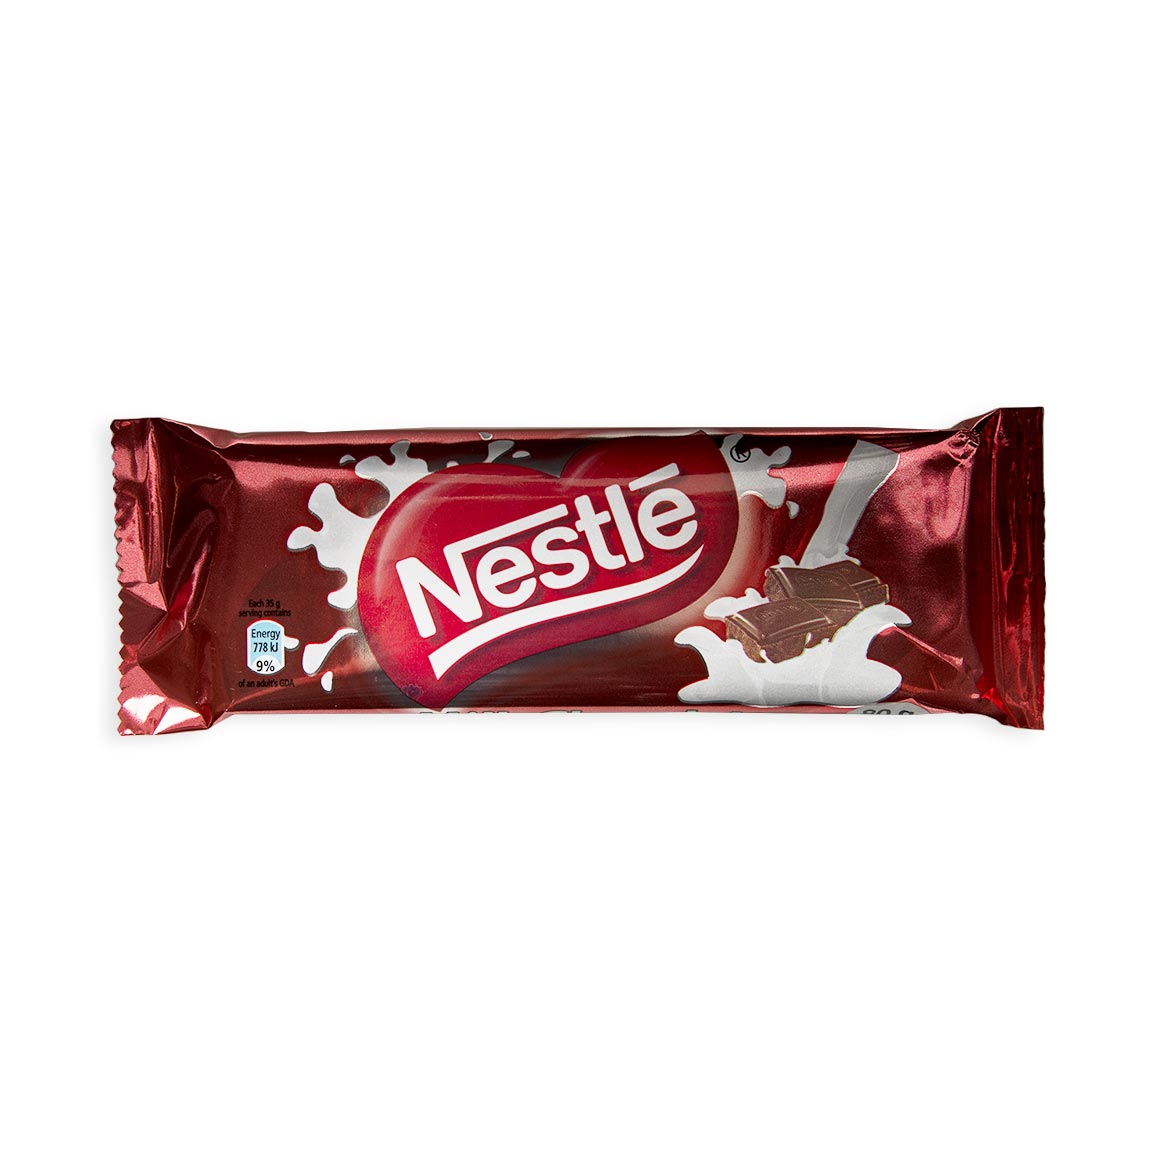 Nestlé Milk Chocolate 80g | Woolworths.co.za